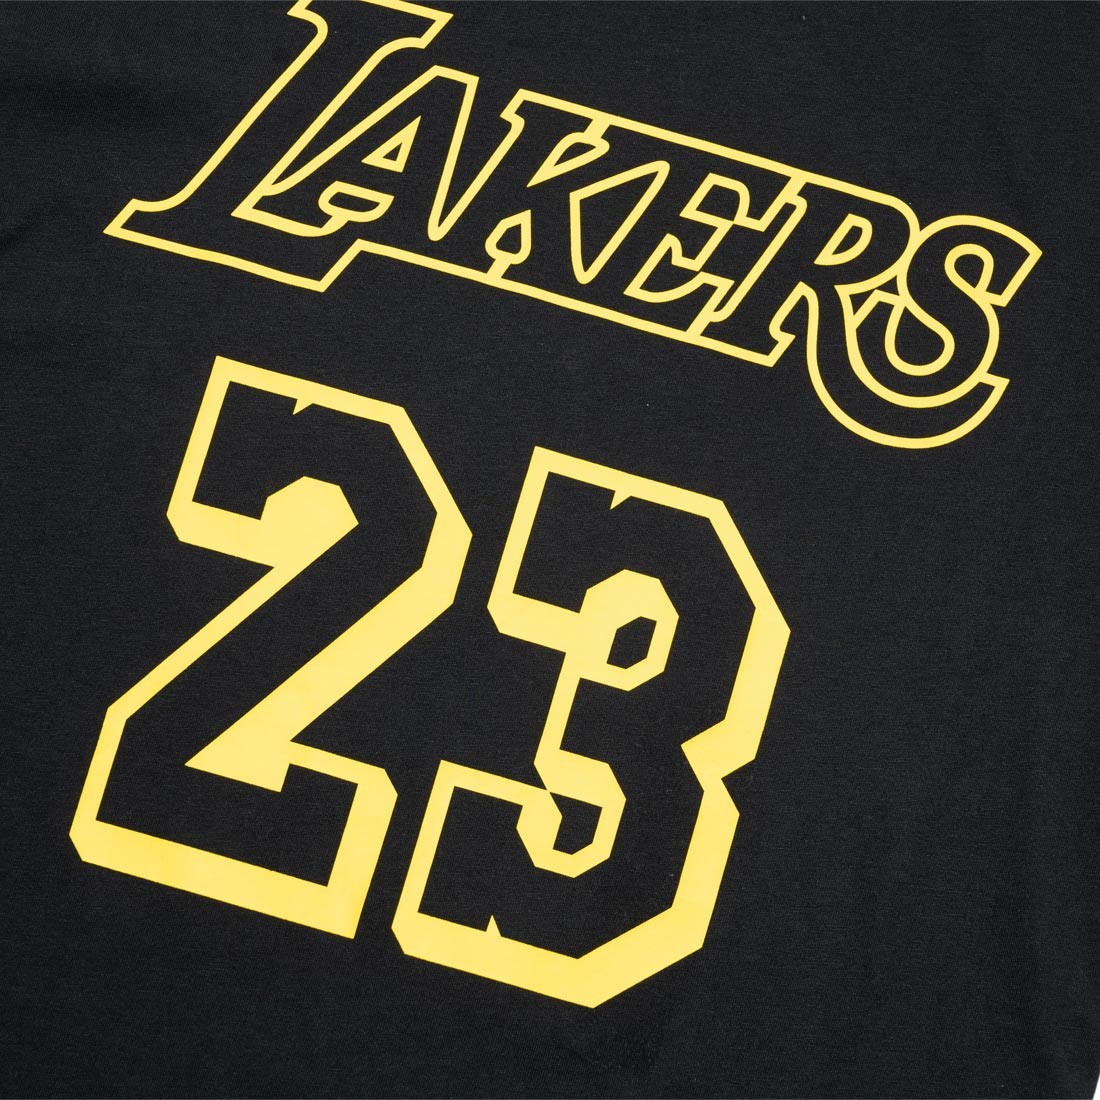 Nike Men NBA Tee - LeBron James Lakers (Black / James Lebron)